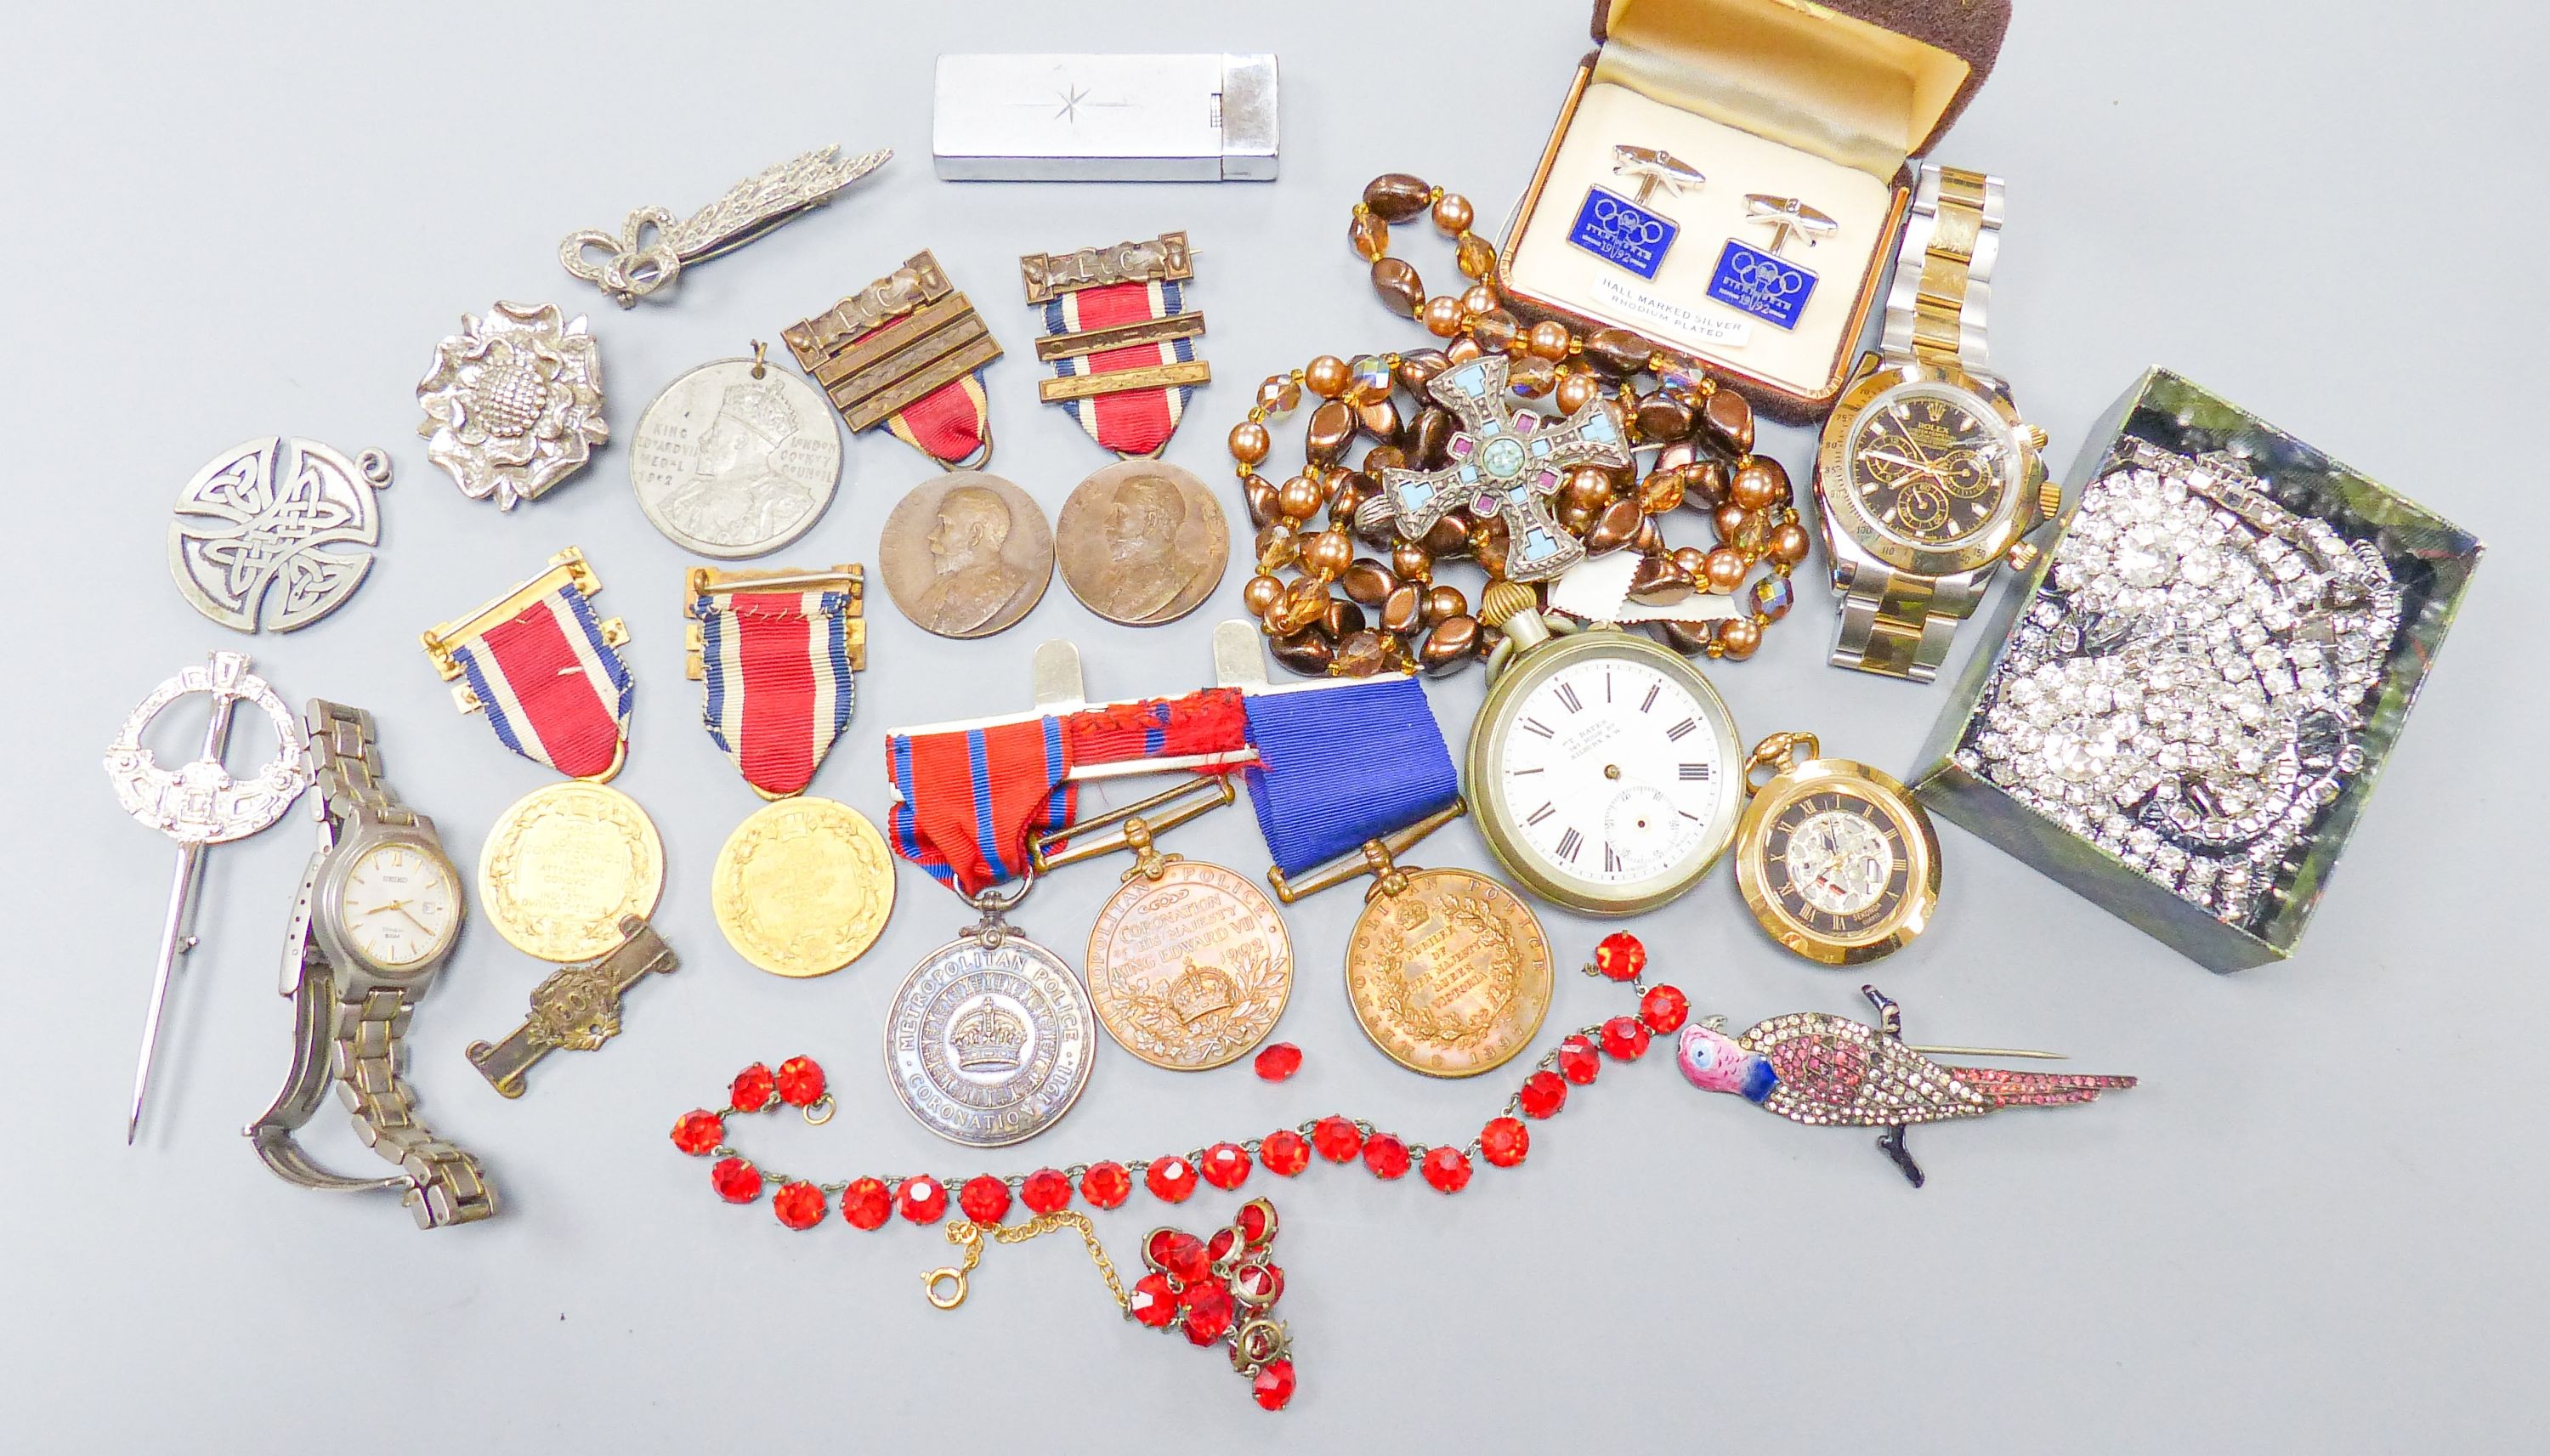 Medals, costume jewellery etc.